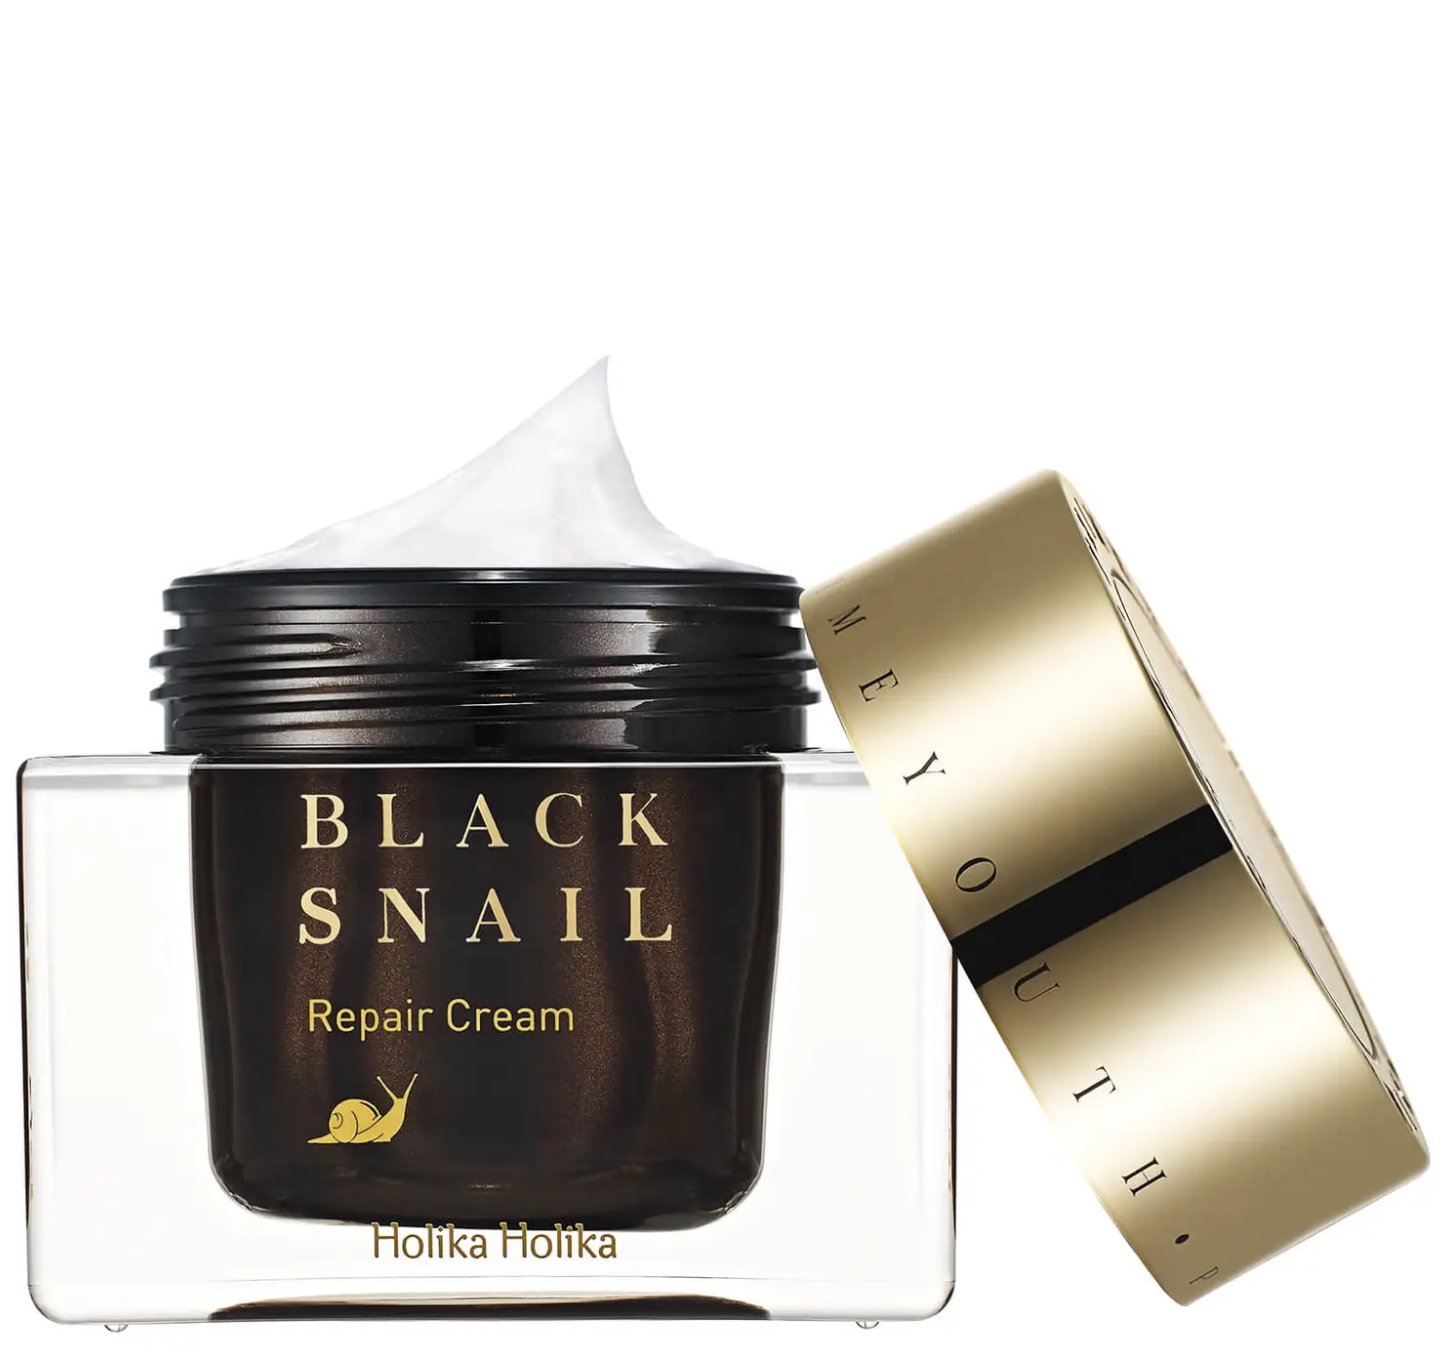 HOLIKA HOLIKA Prime Youth Black Snail Repair Cream 50ml - The Face Method